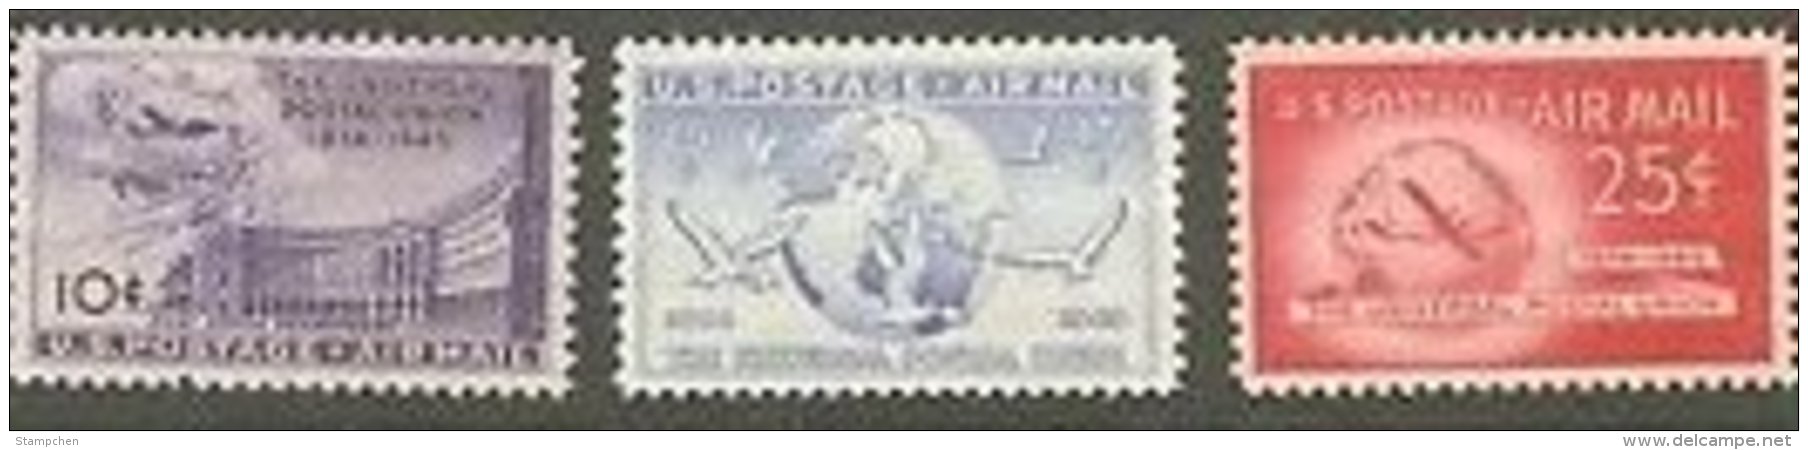 USA 1949  Air Mail Stamps-Universal Postal Union Sc#c42-c44 UPU Post Airplane Plane Dove Bird Globe - WPV (Weltpostverein)